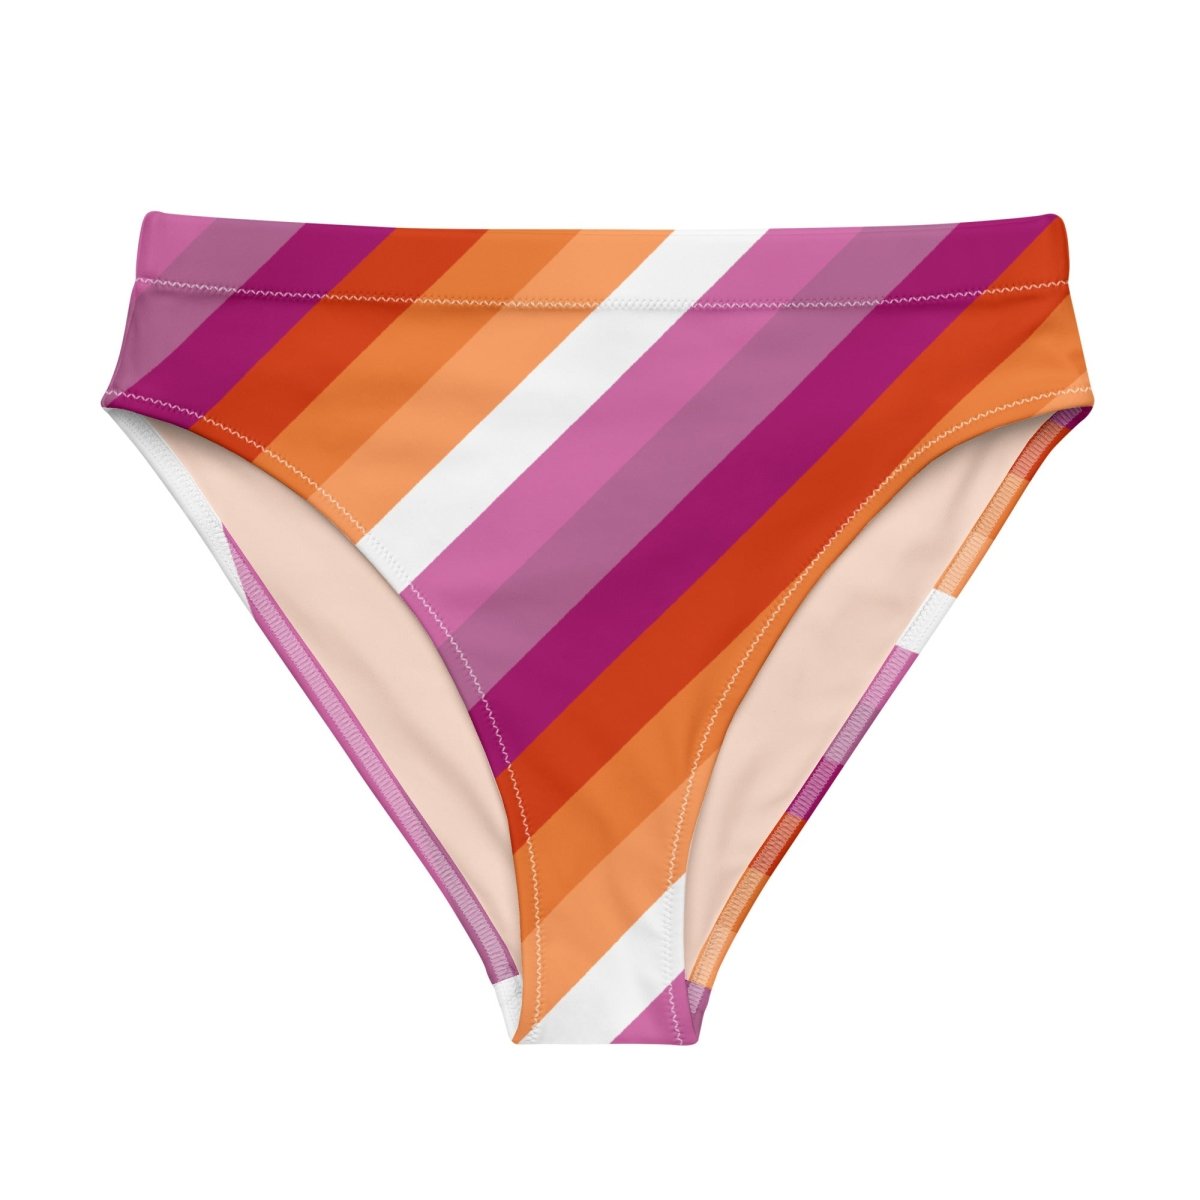 Rainbow Flag Bikini Bottoms